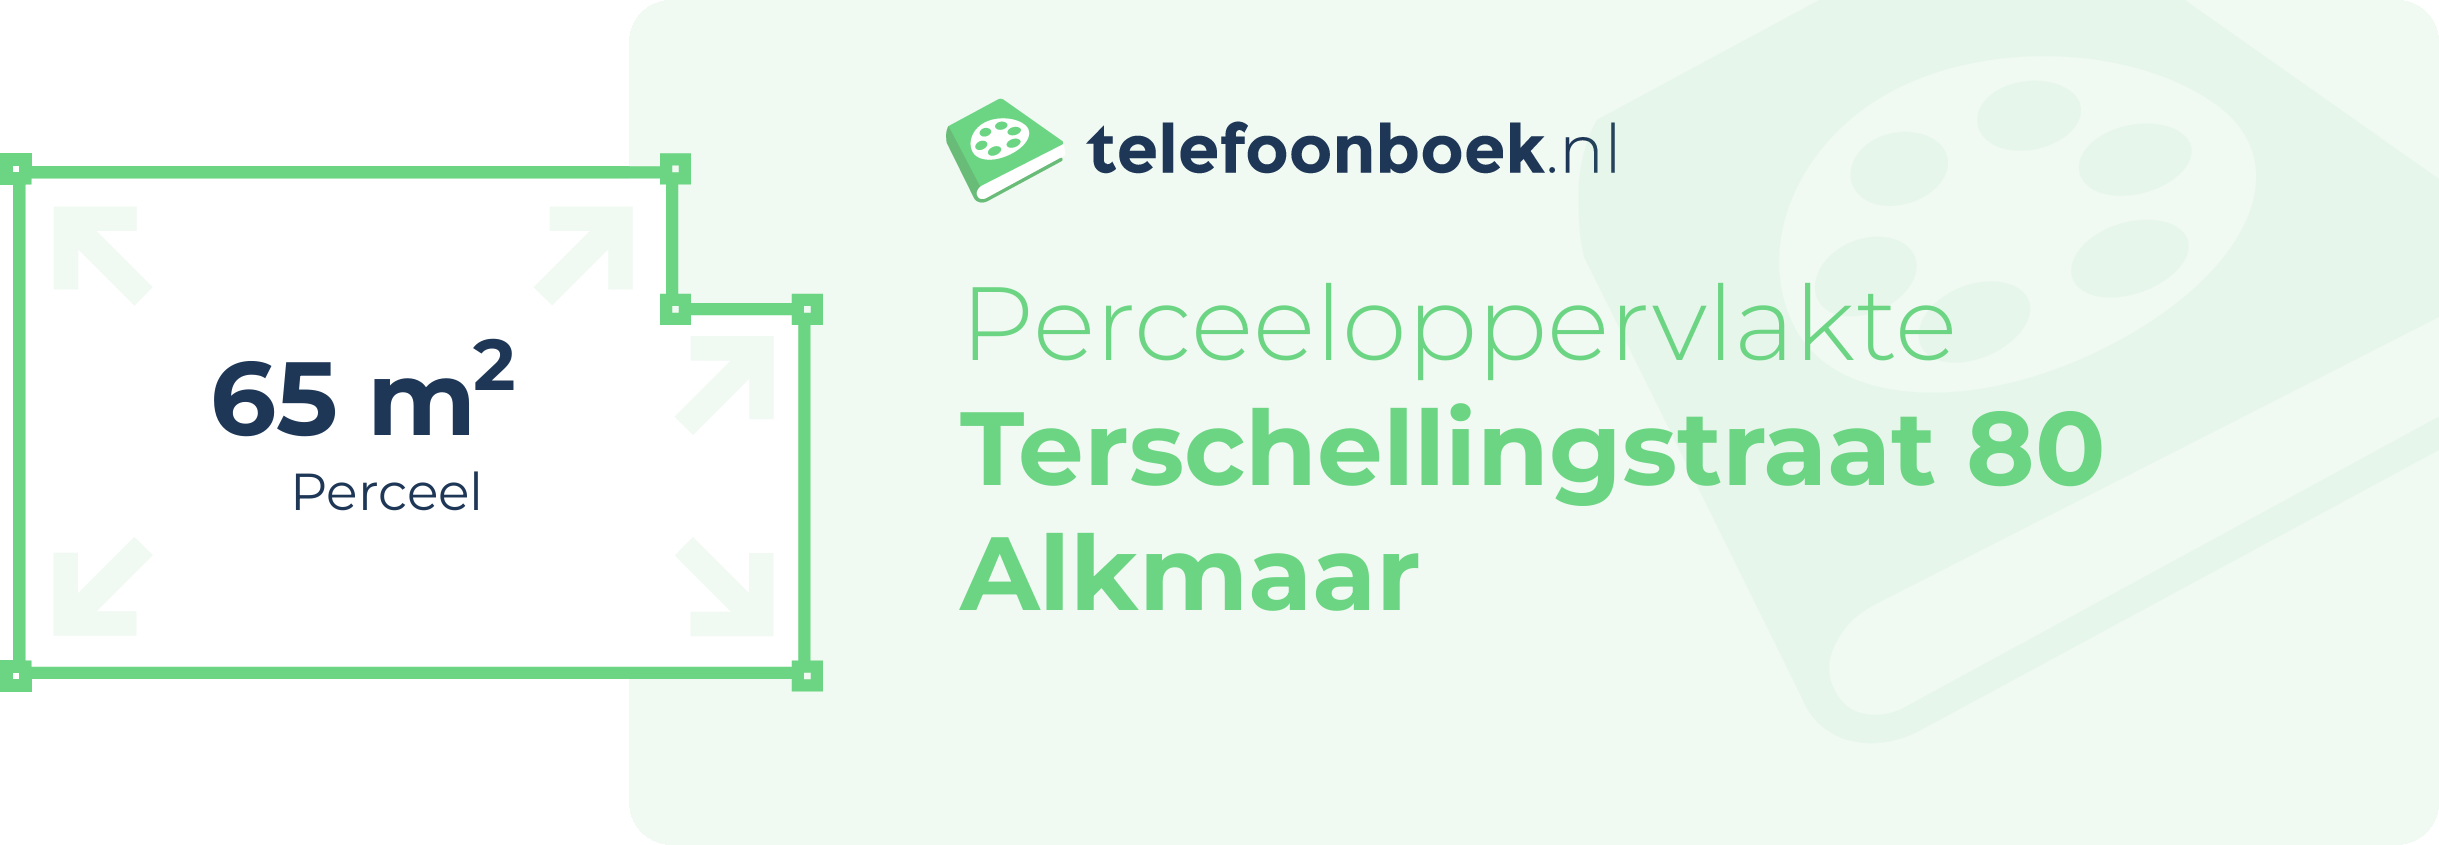 Perceeloppervlakte Terschellingstraat 80 Alkmaar